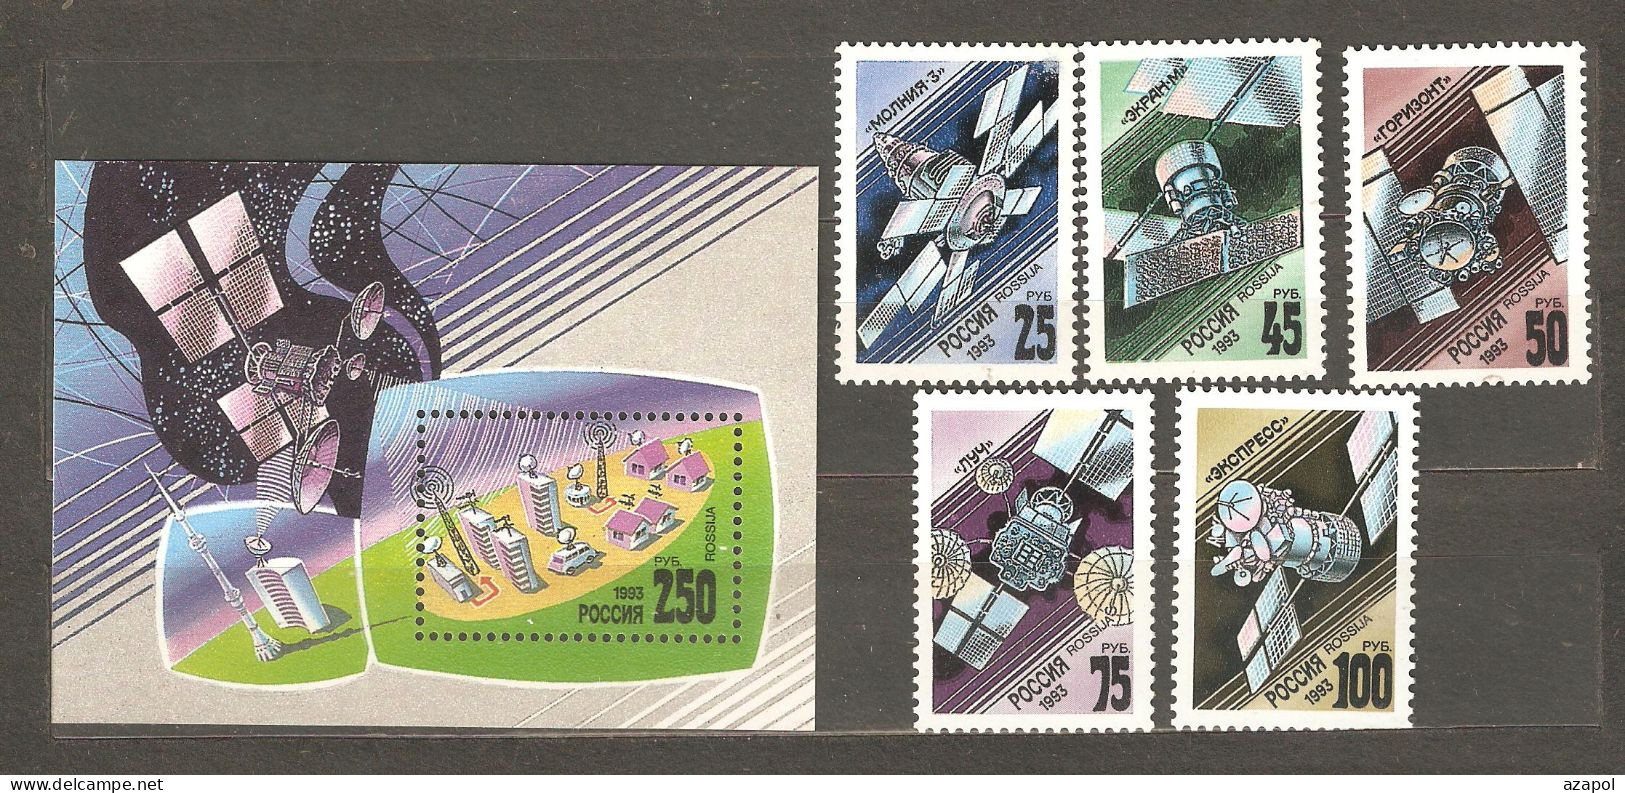 Space: Full Set Of 5 Mint Stamps + Block, Russia, 1993, Mi#301-305, Bl-4, MNH - Russia & USSR